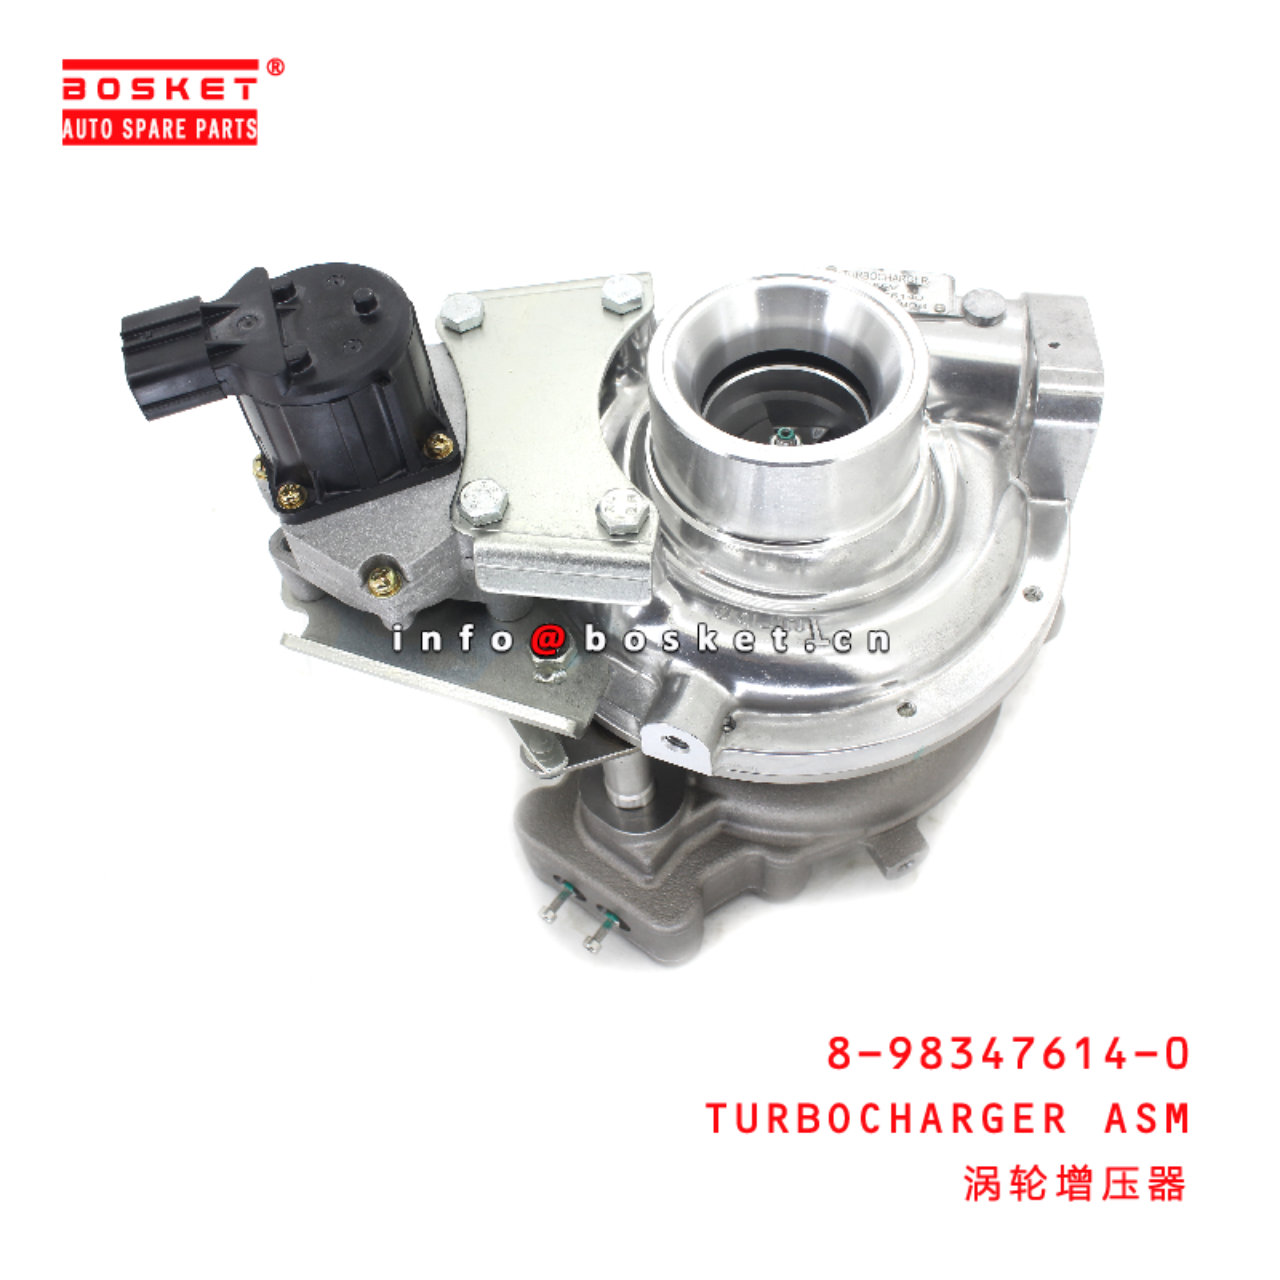 8-98347614-0 Turbocharger Assembly suitable for ISUZU NPR 4HK1 8983476140